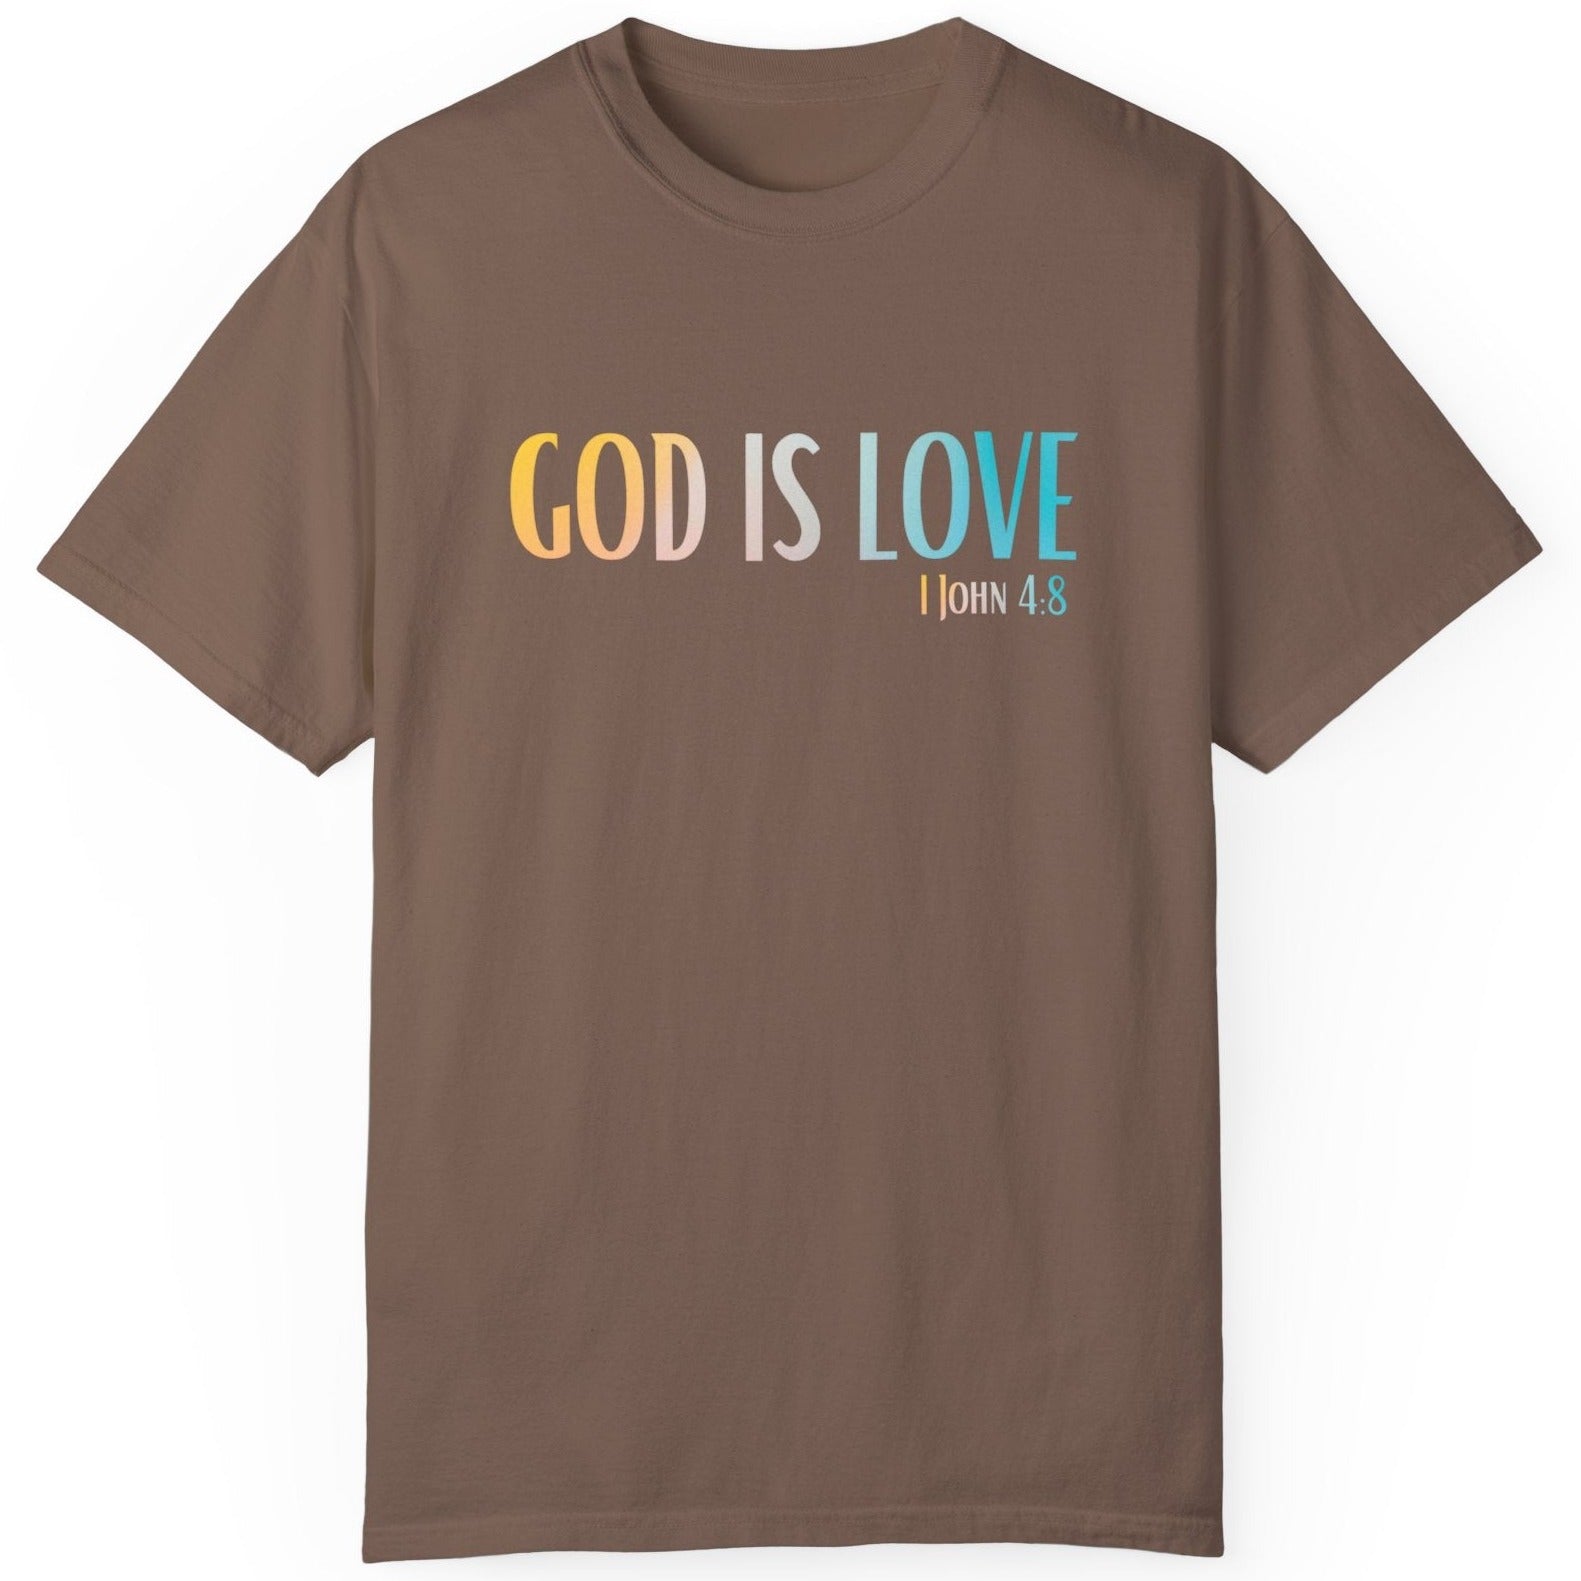 1 John 4:8 God is Love, Christian Garment-Dyed T-shirt for men and women brown espresso